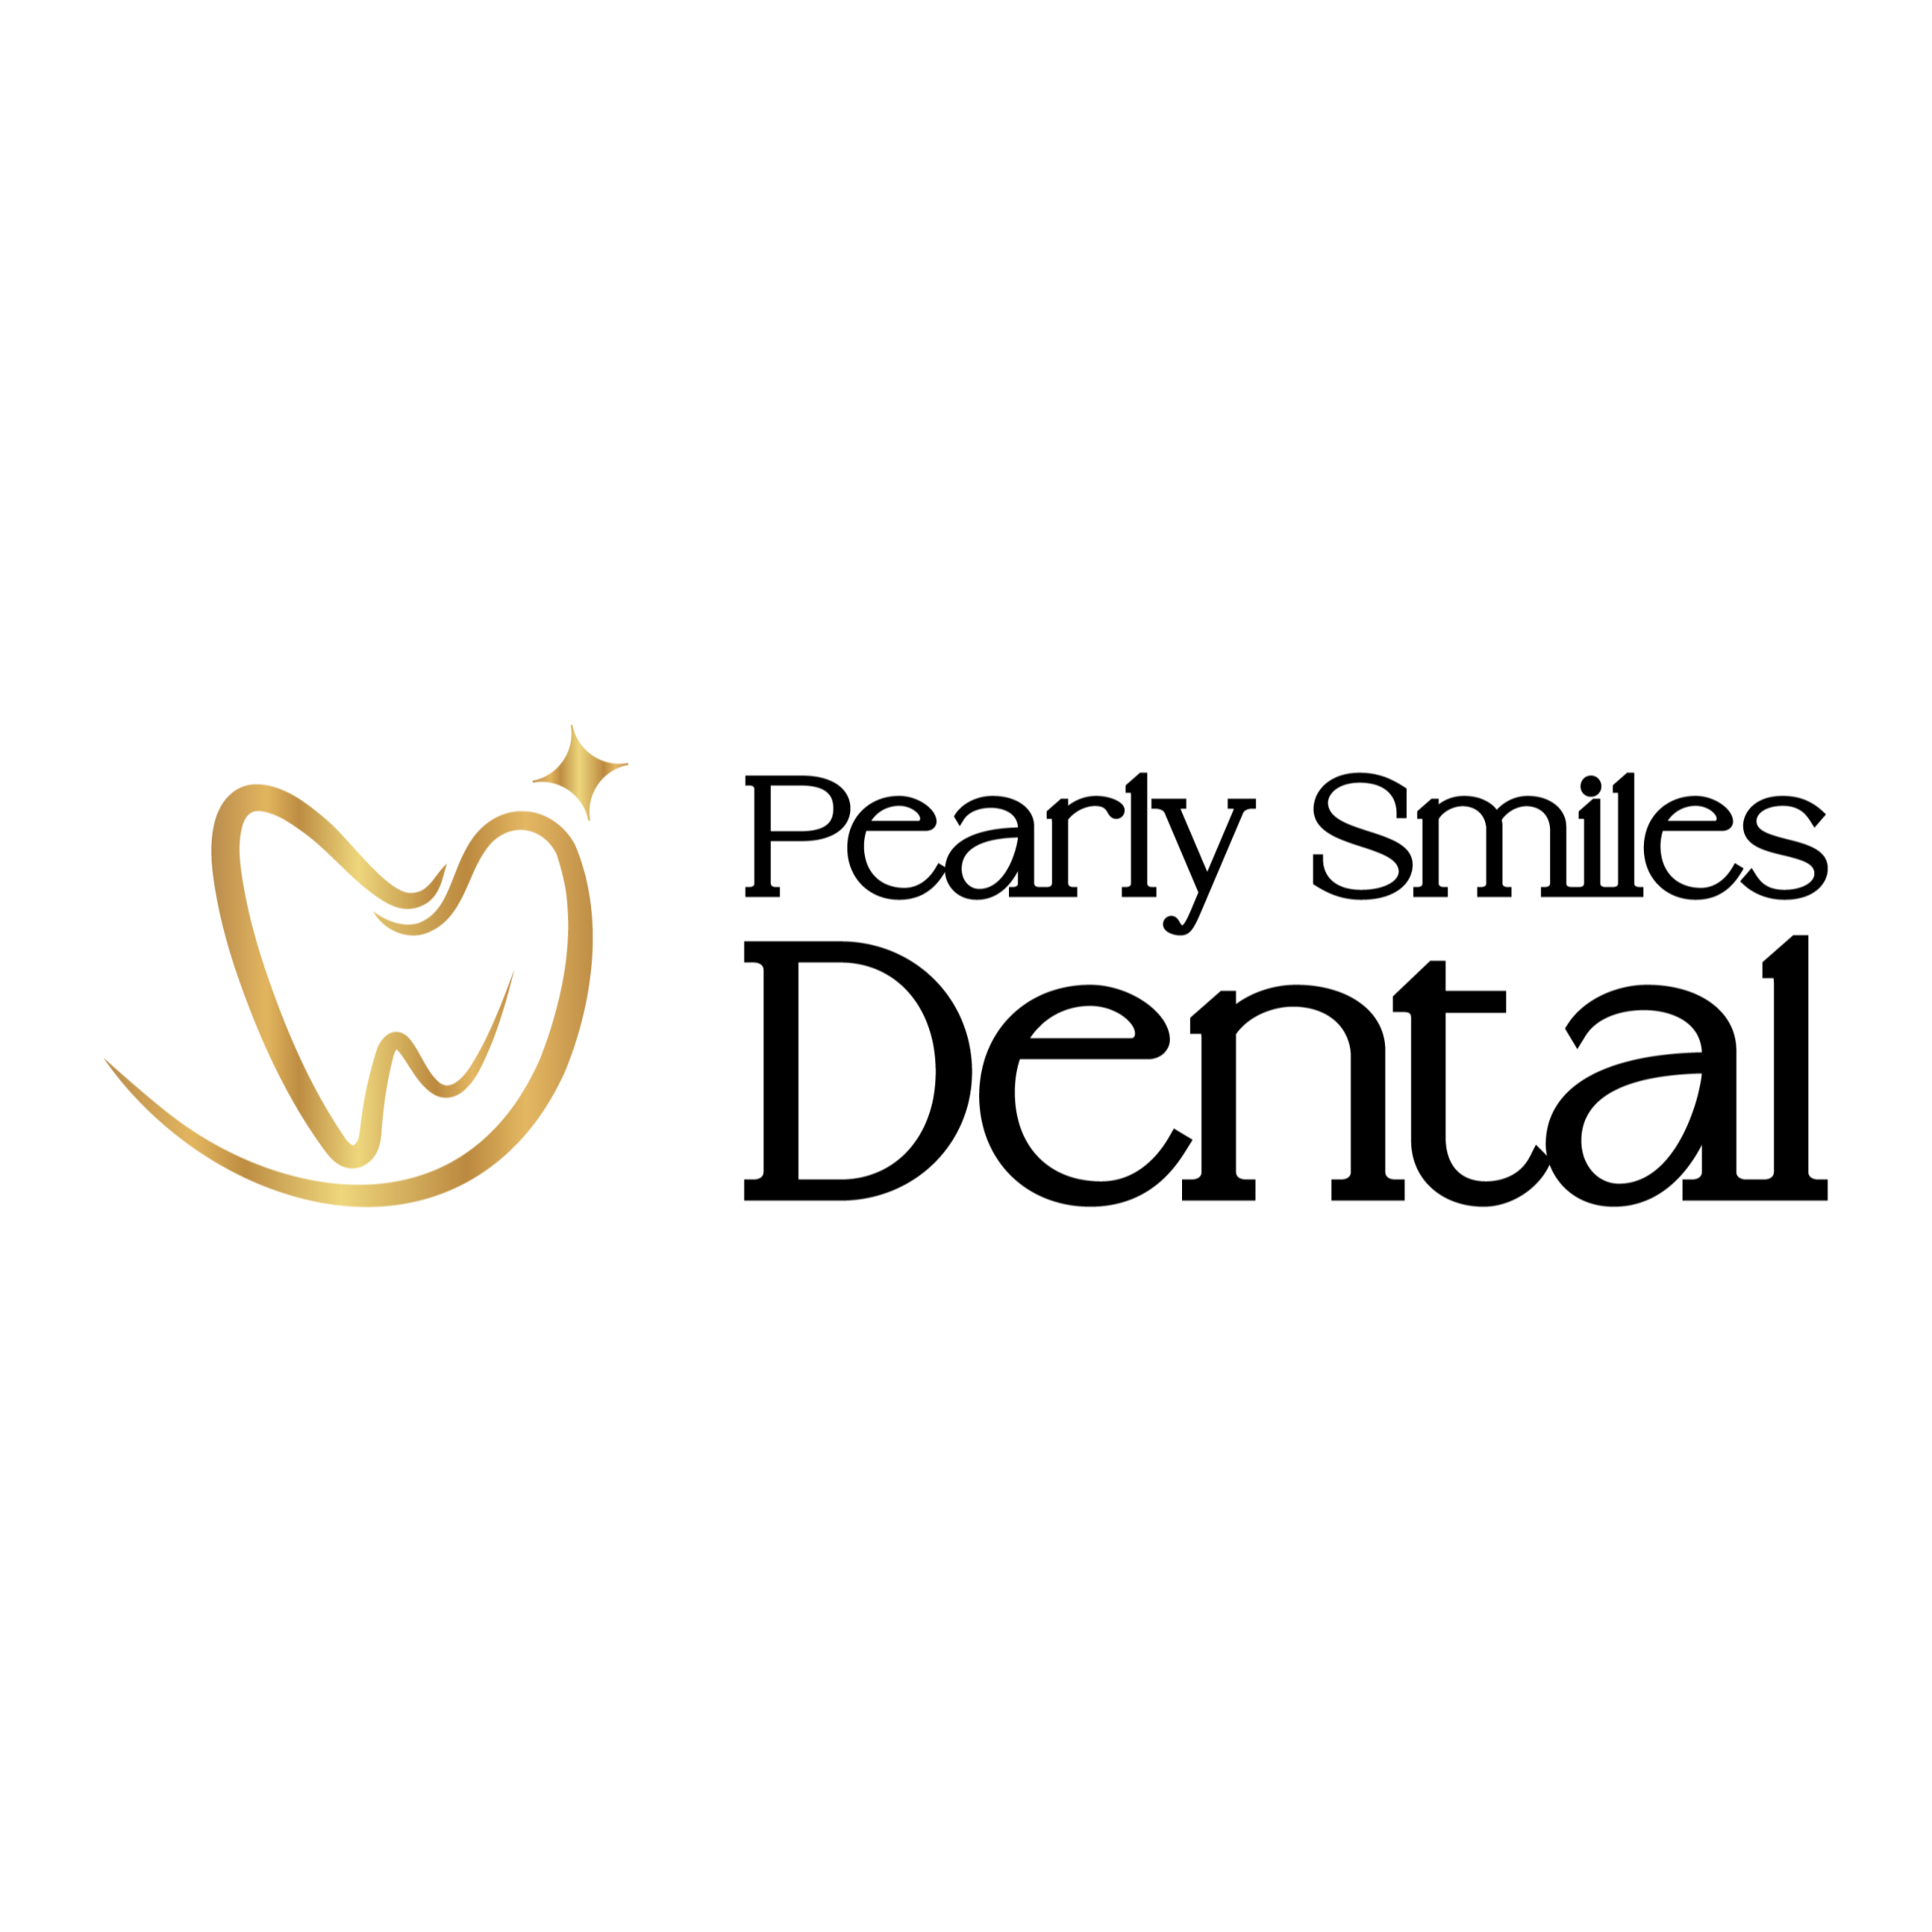 Pearly Smiles Dental - Aurora, IL 60502 - (630)454-7655 | ShowMeLocal.com